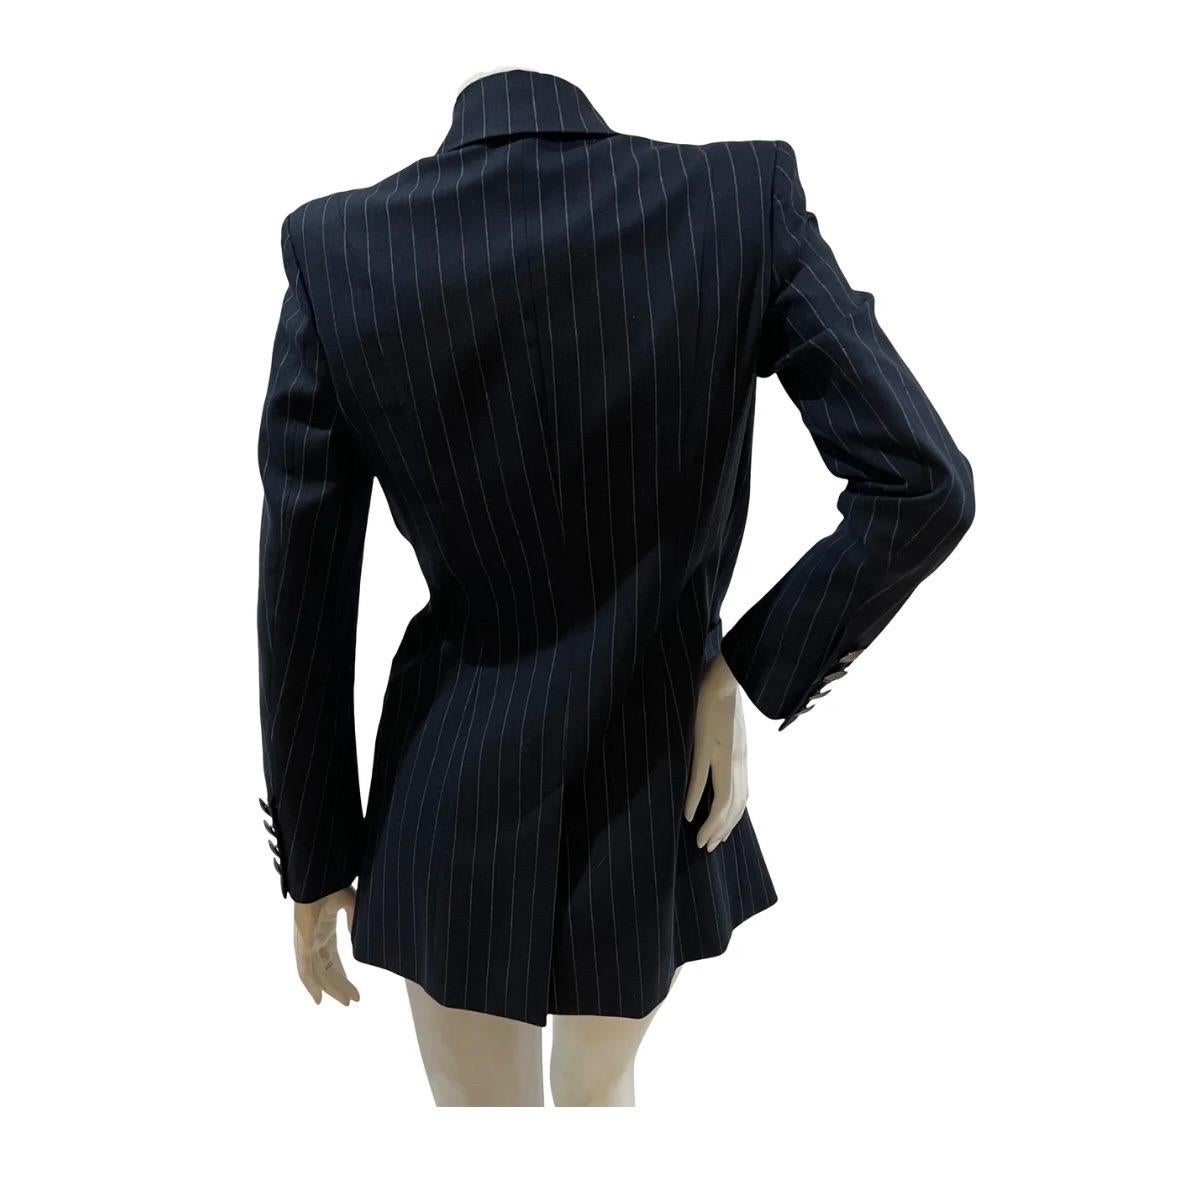 Pierre Balmain Pinstripe Jacket (Circa 2010) In Excellent Condition For Sale In Los Angeles, CA